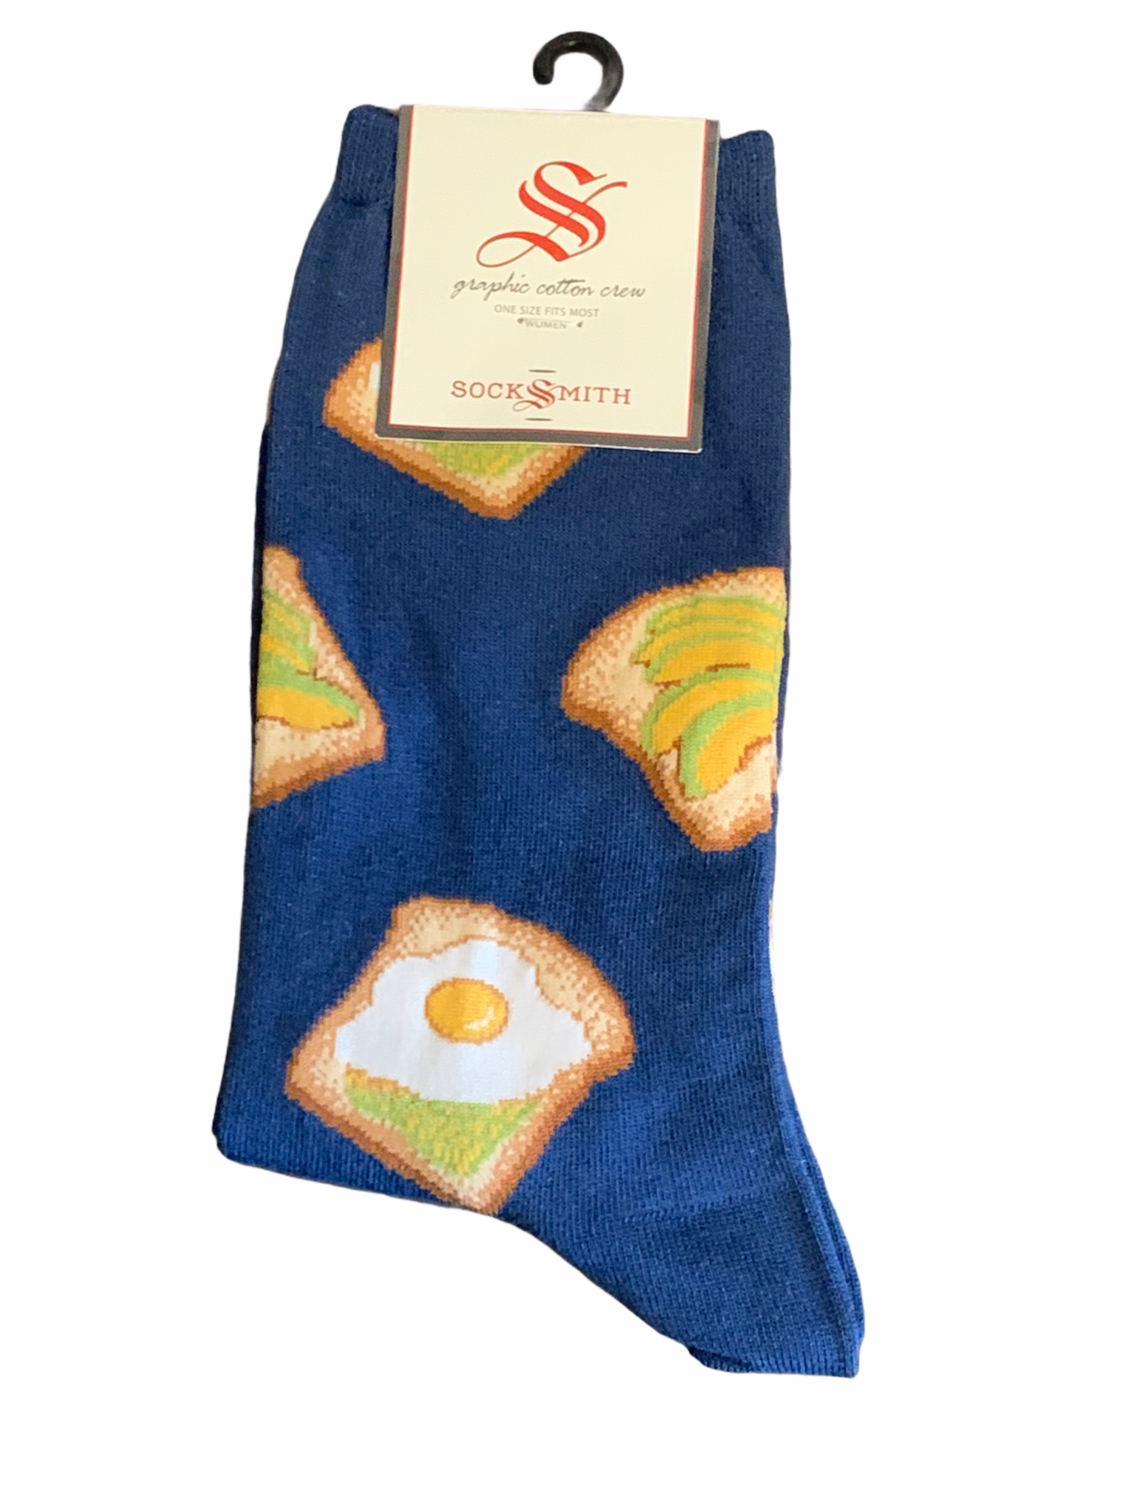 P&L- Assorted Socks (Socksmith)